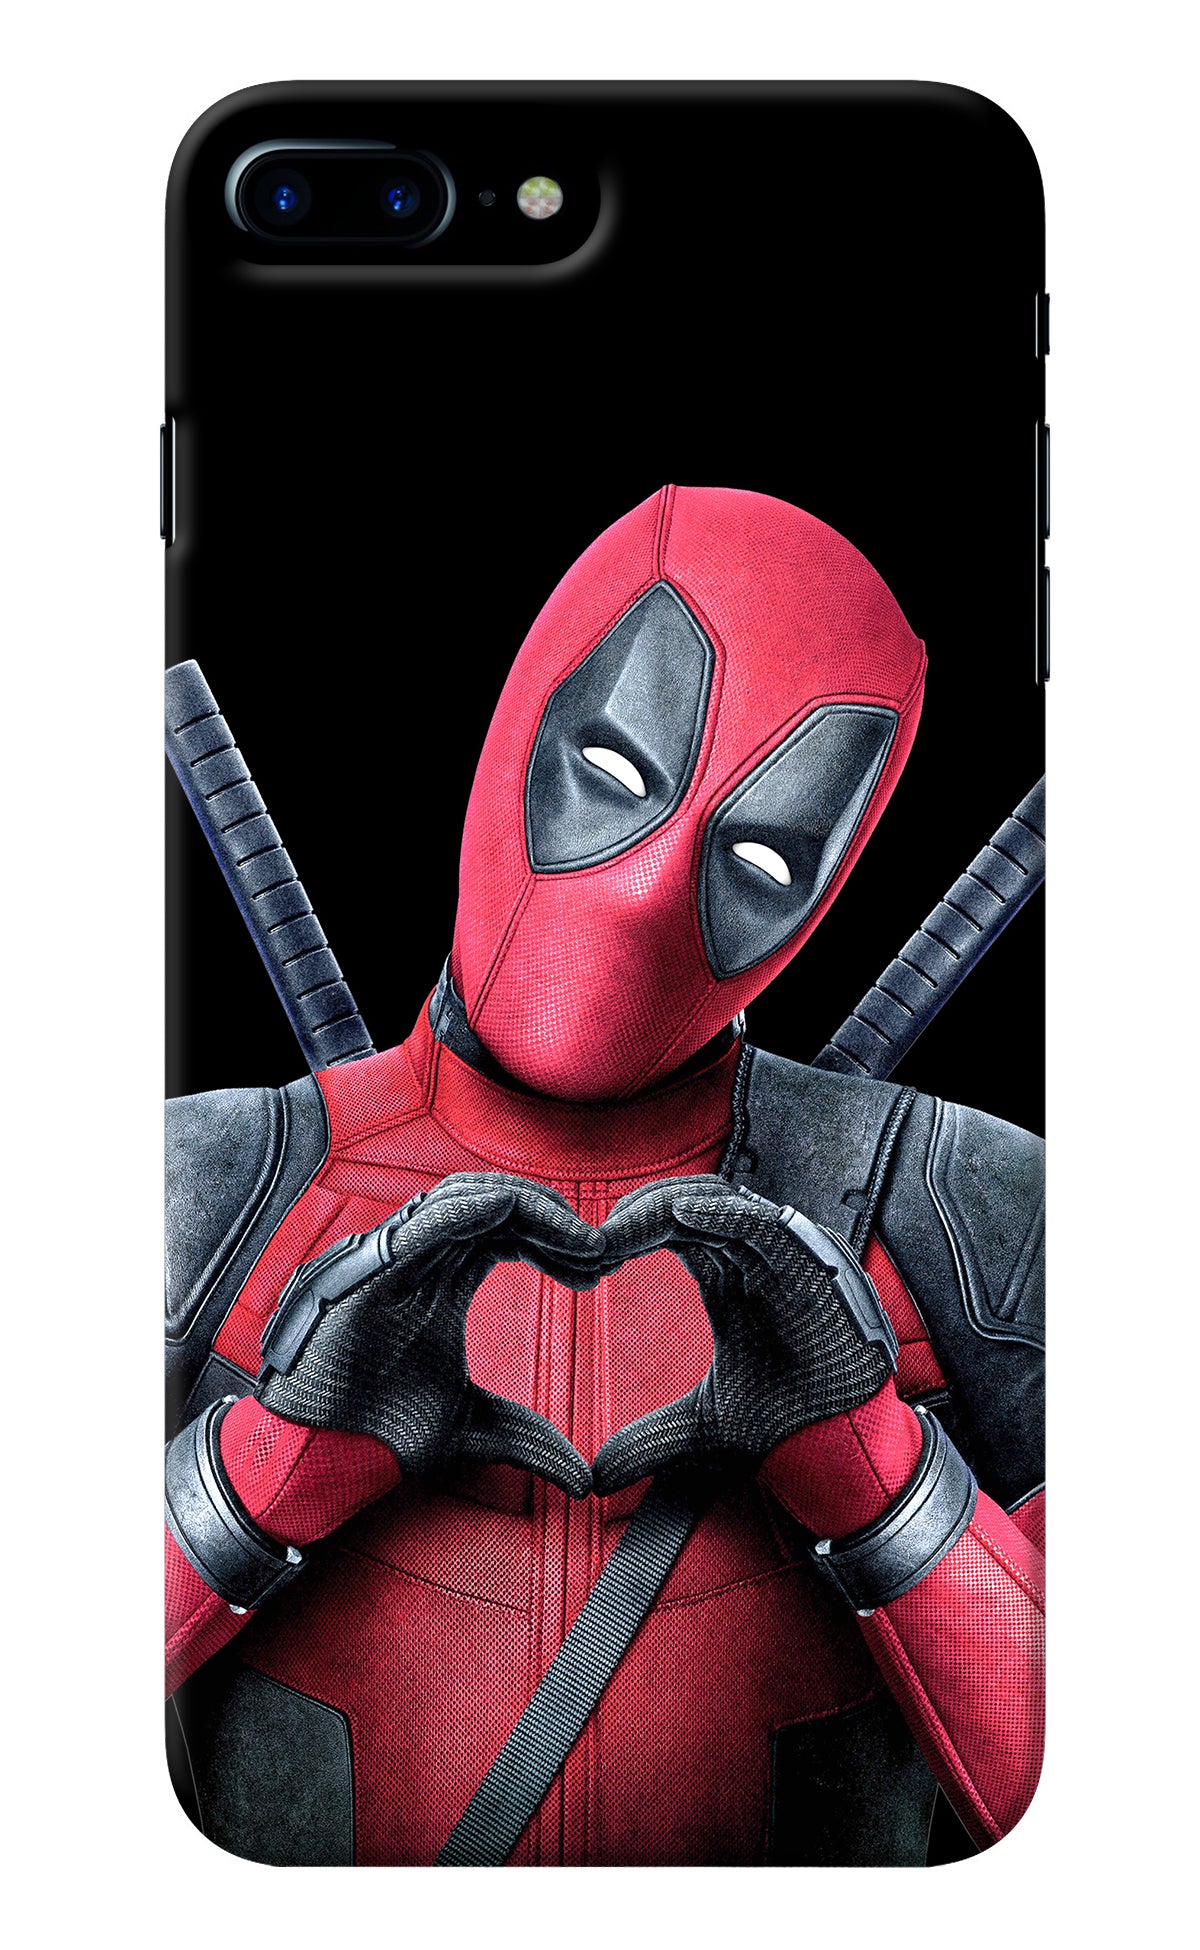 Deadpool iPhone 7 Plus Back Cover